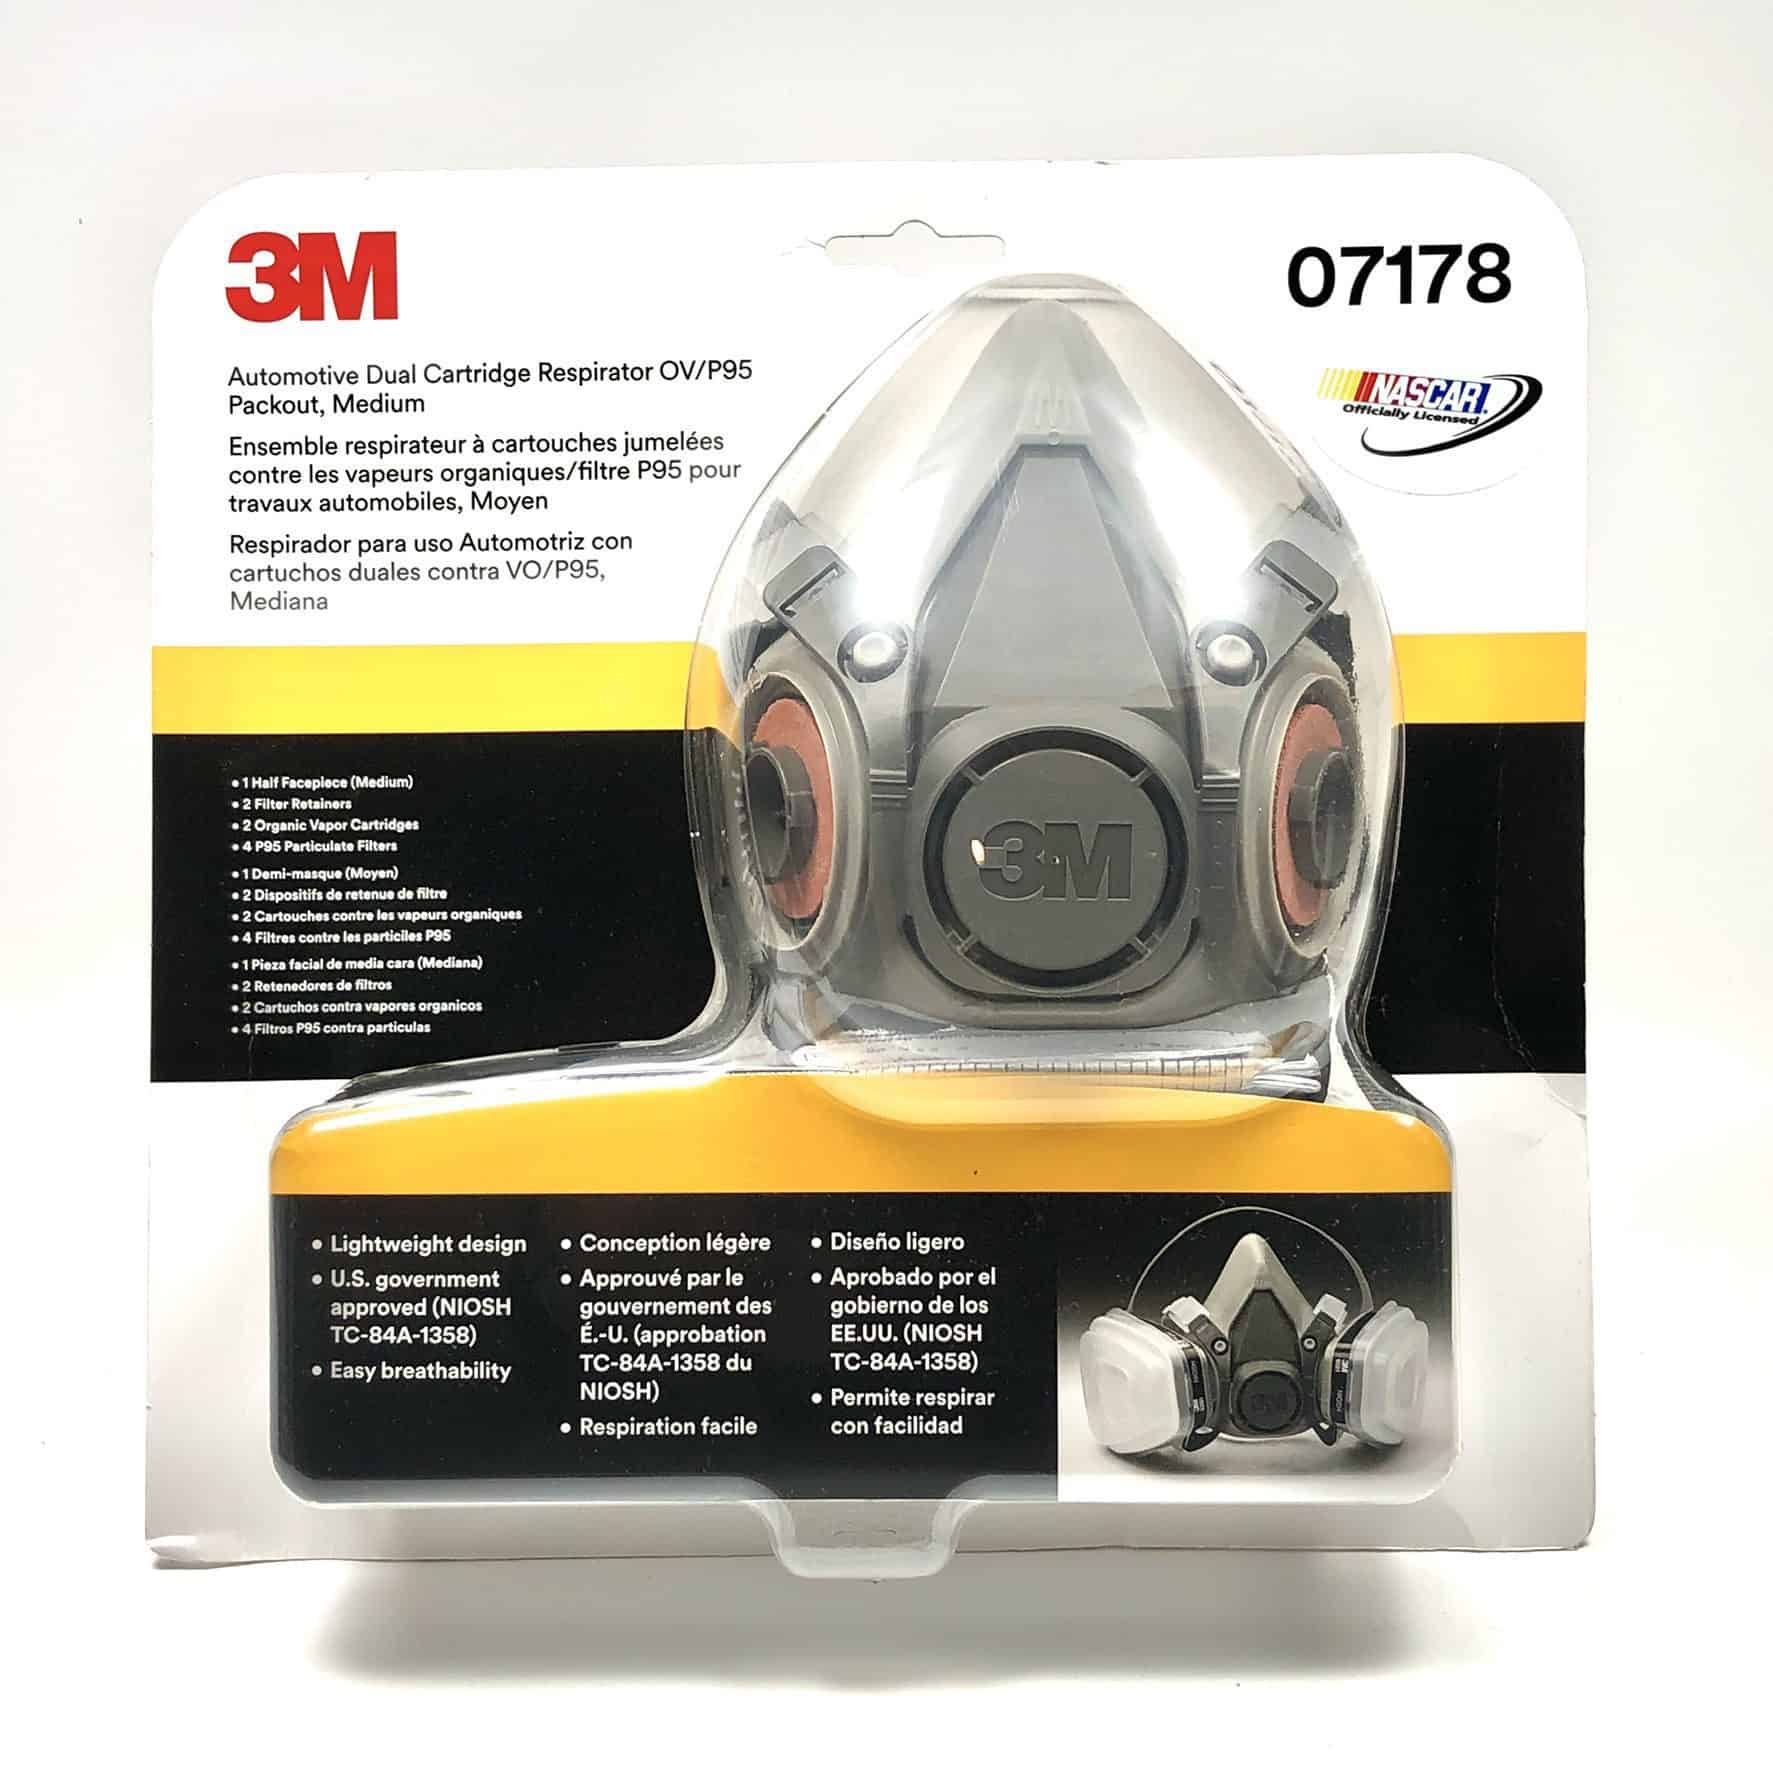 3M Automotive Dual Cartridge Respirator Mask 07178 2